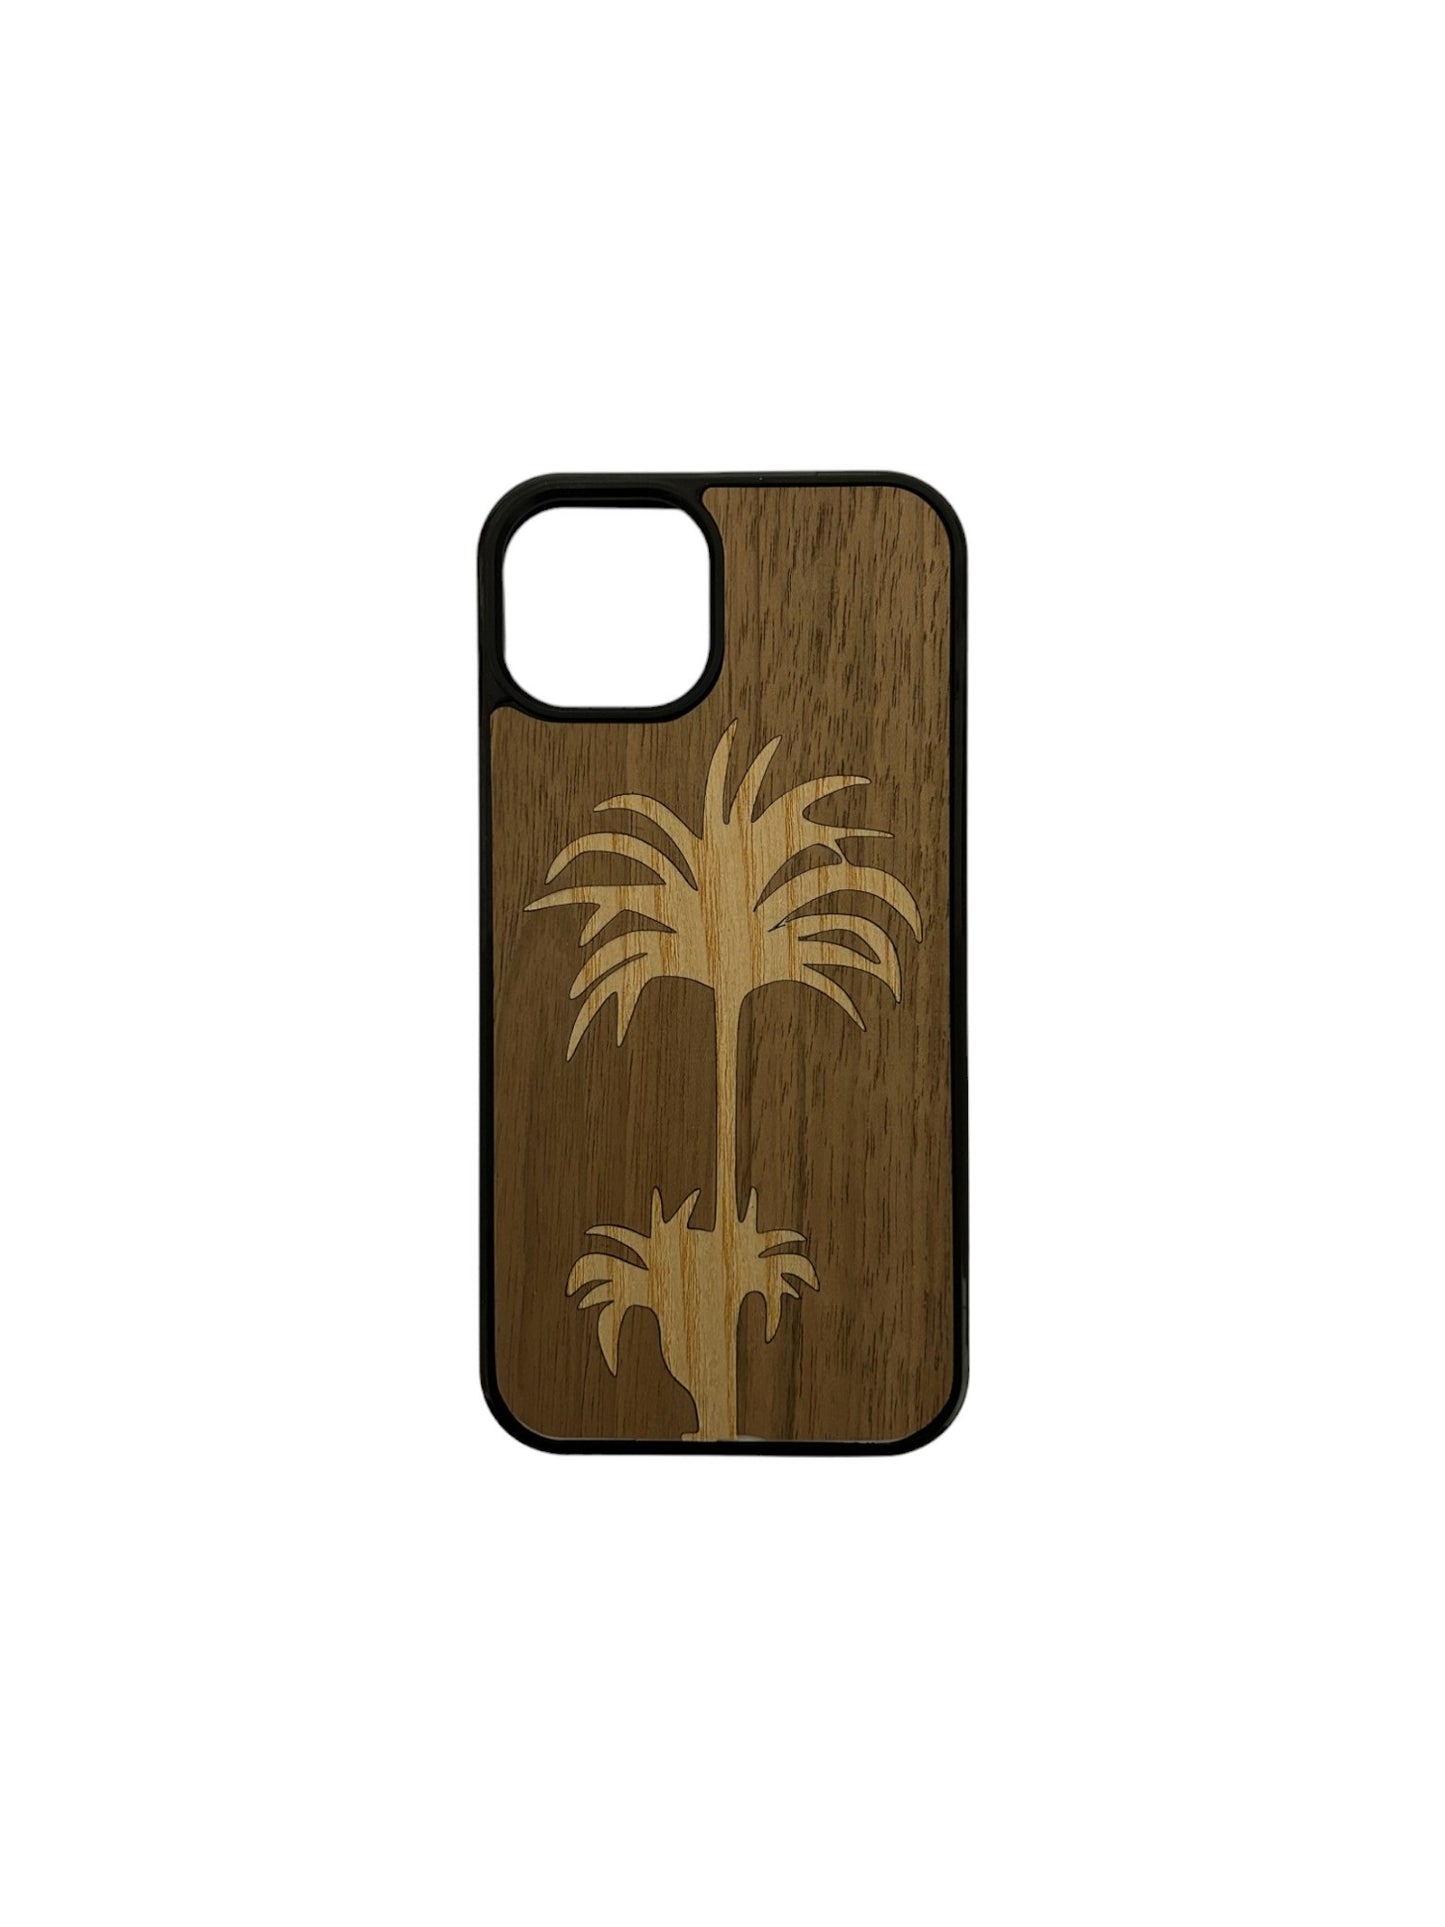 Iphone case - Palm tree